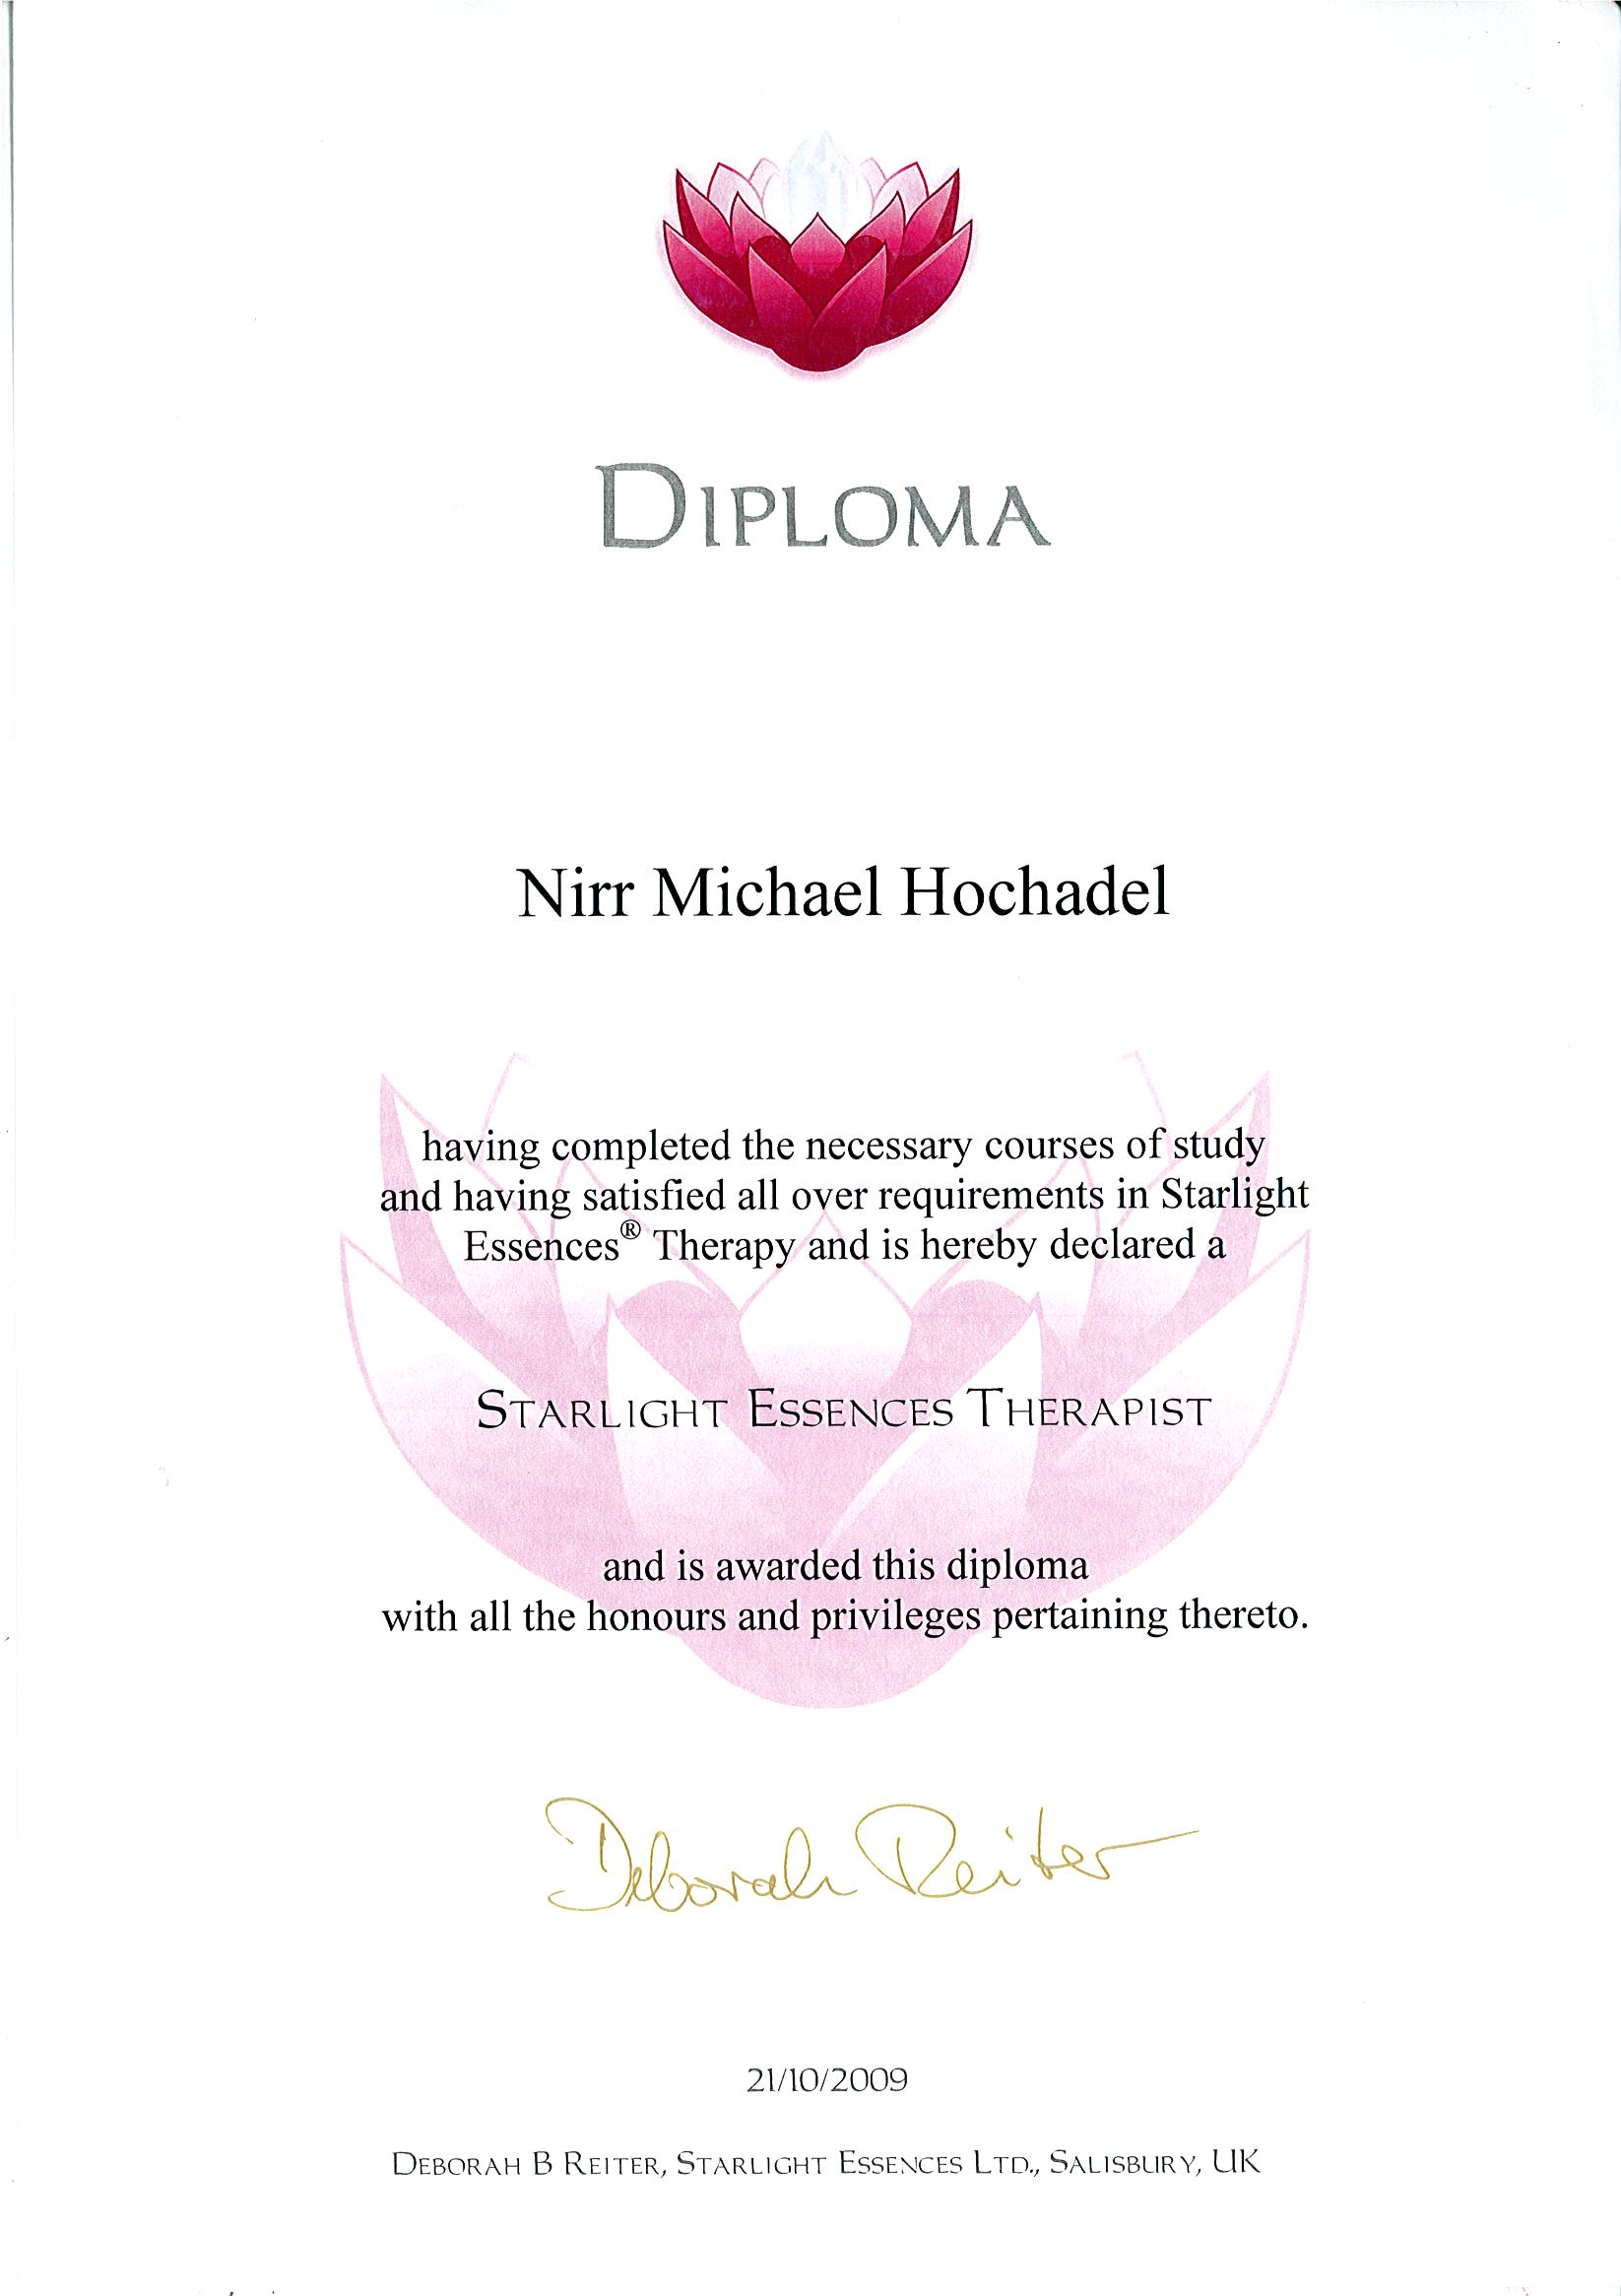 Diploma Starlight Essences Therapist